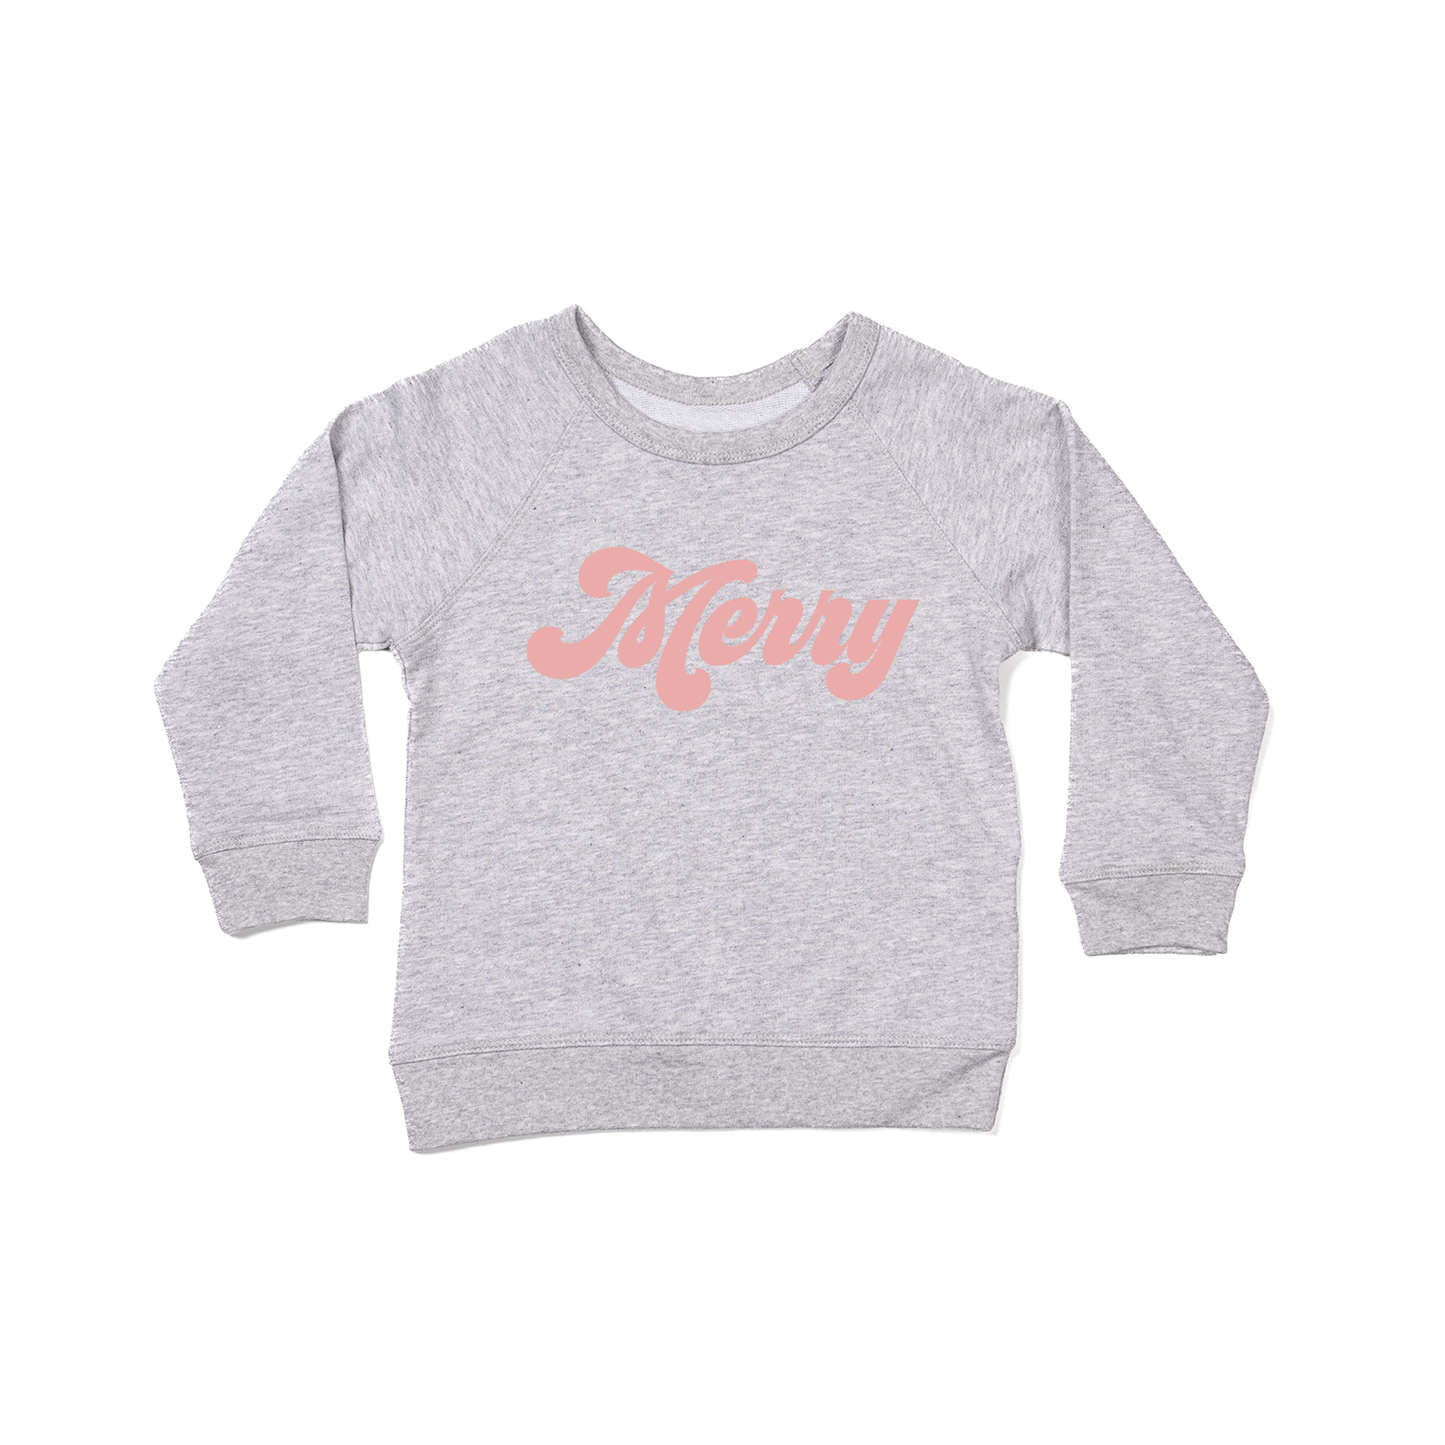 Merry (Retro, Pink) - Kids Sweatshirt (Heather Gray)